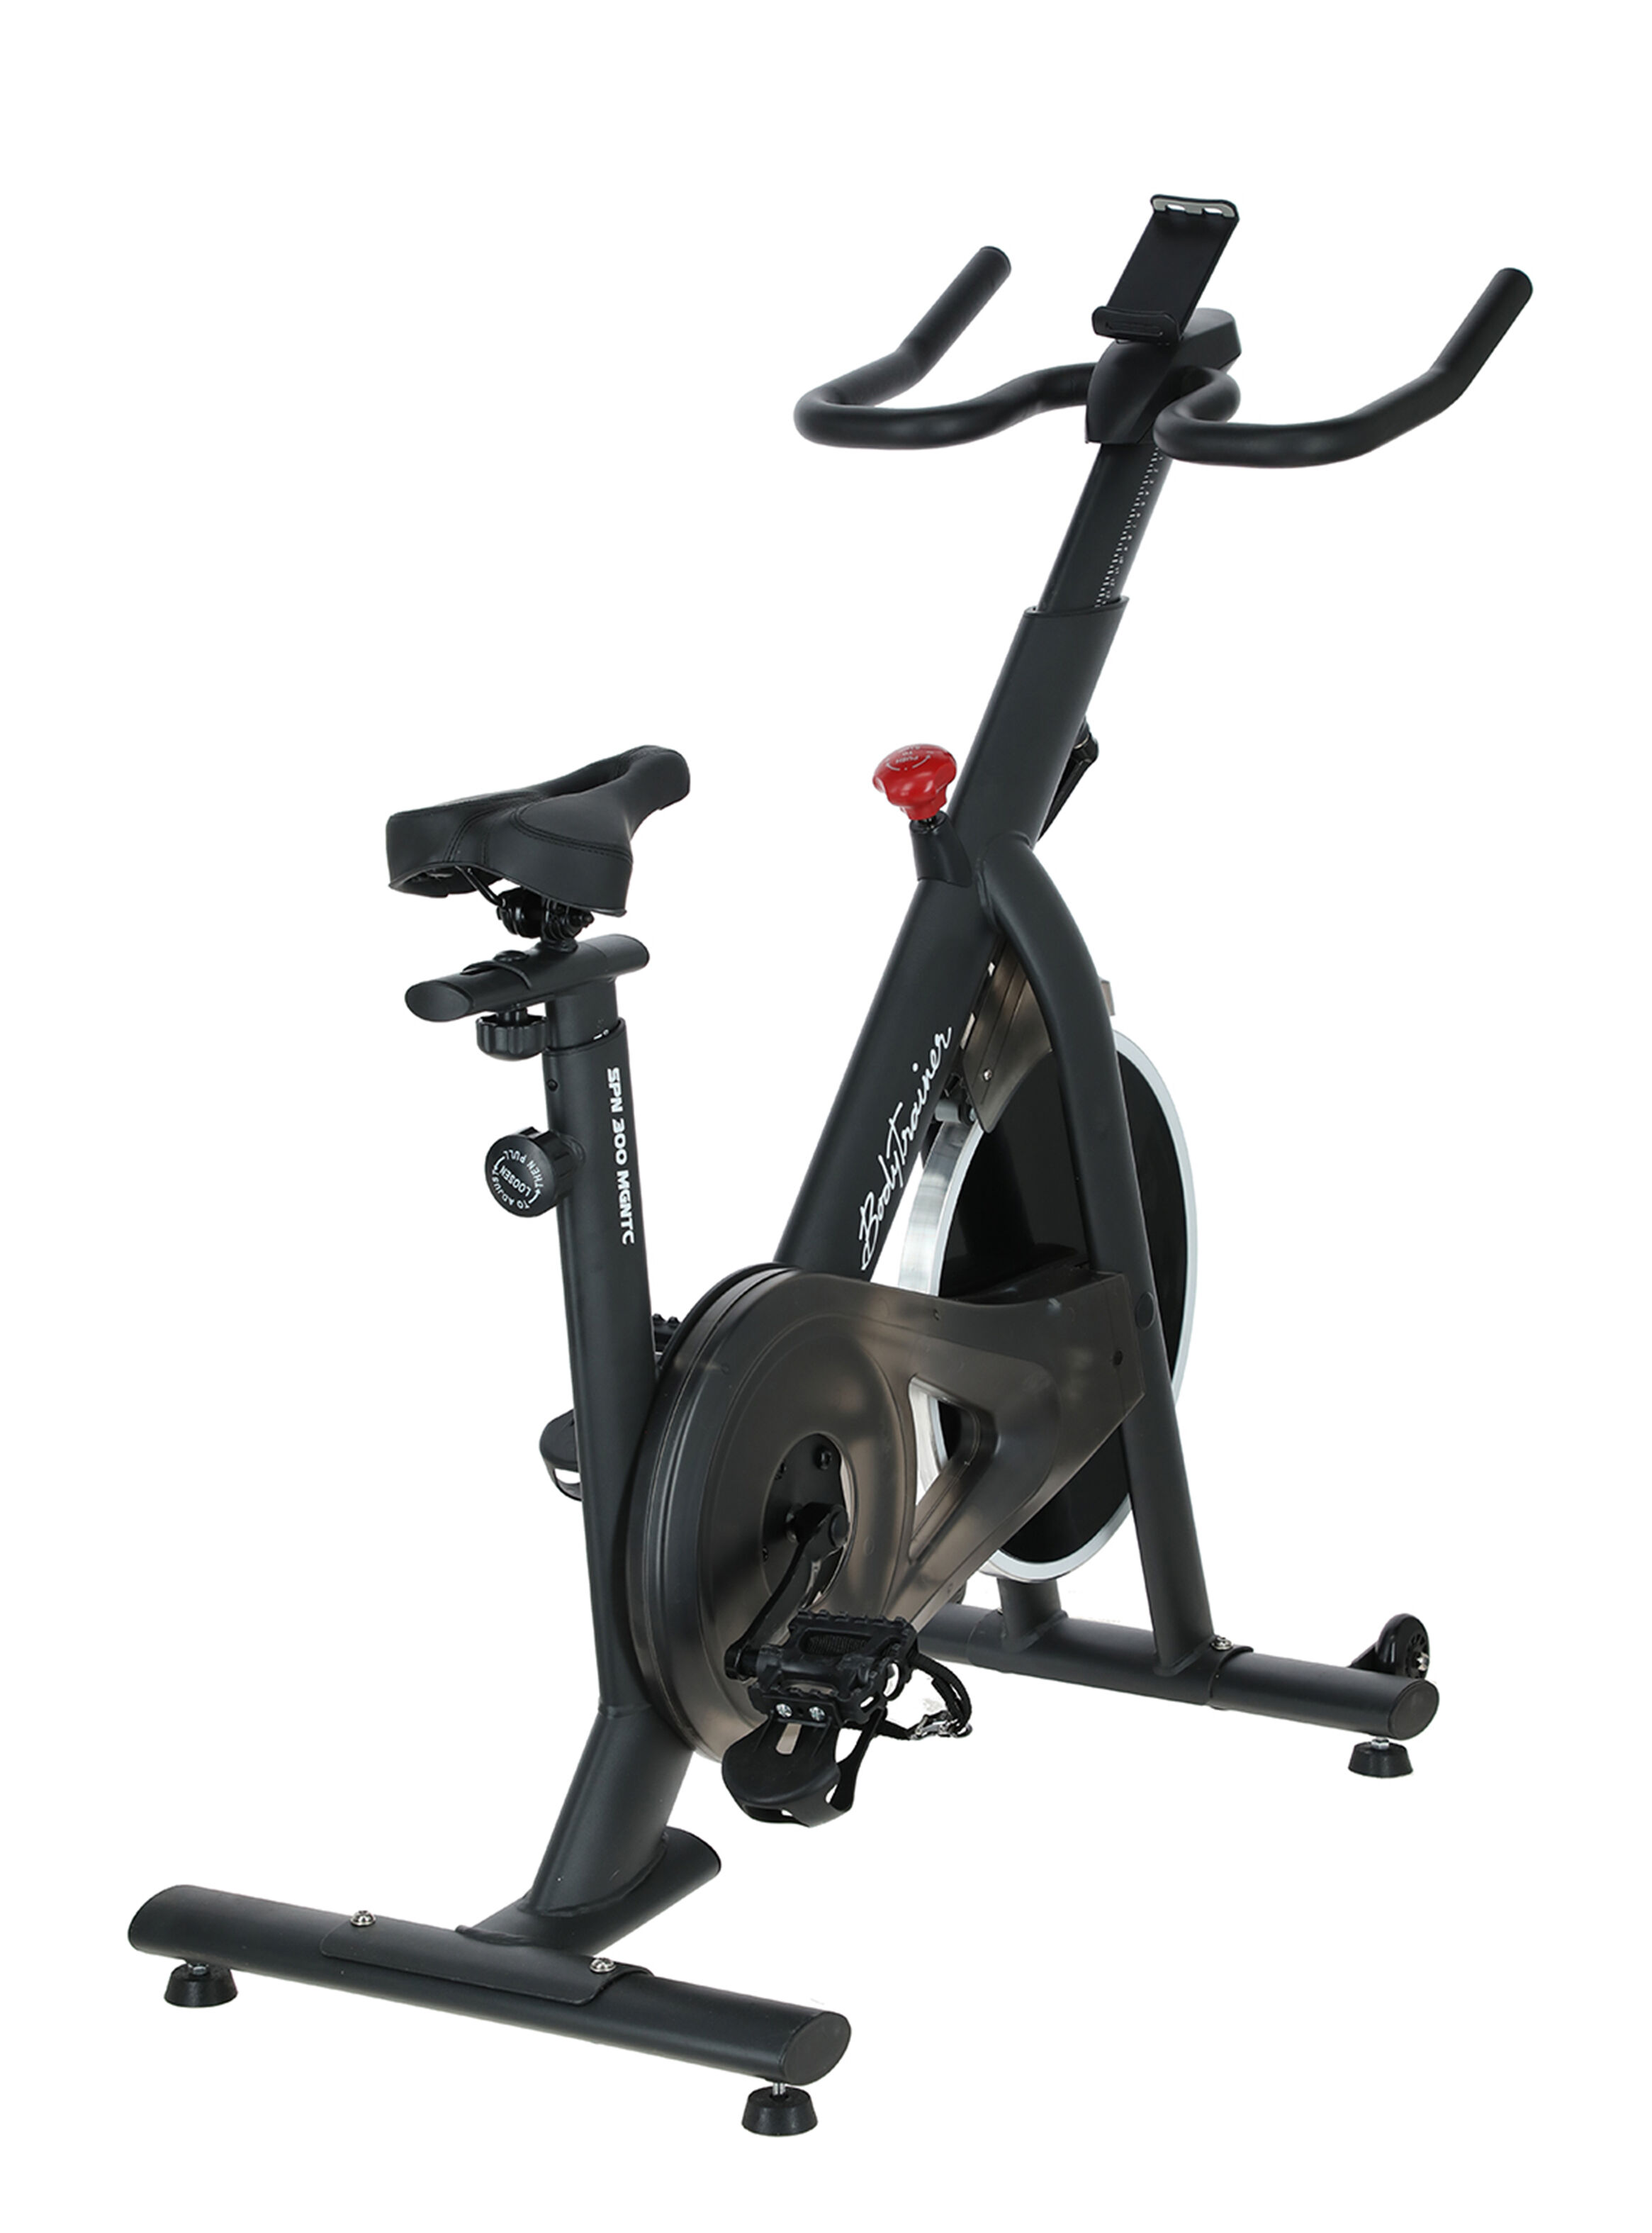 Bicicleta spinning magnética SpinPro218 - Pesados